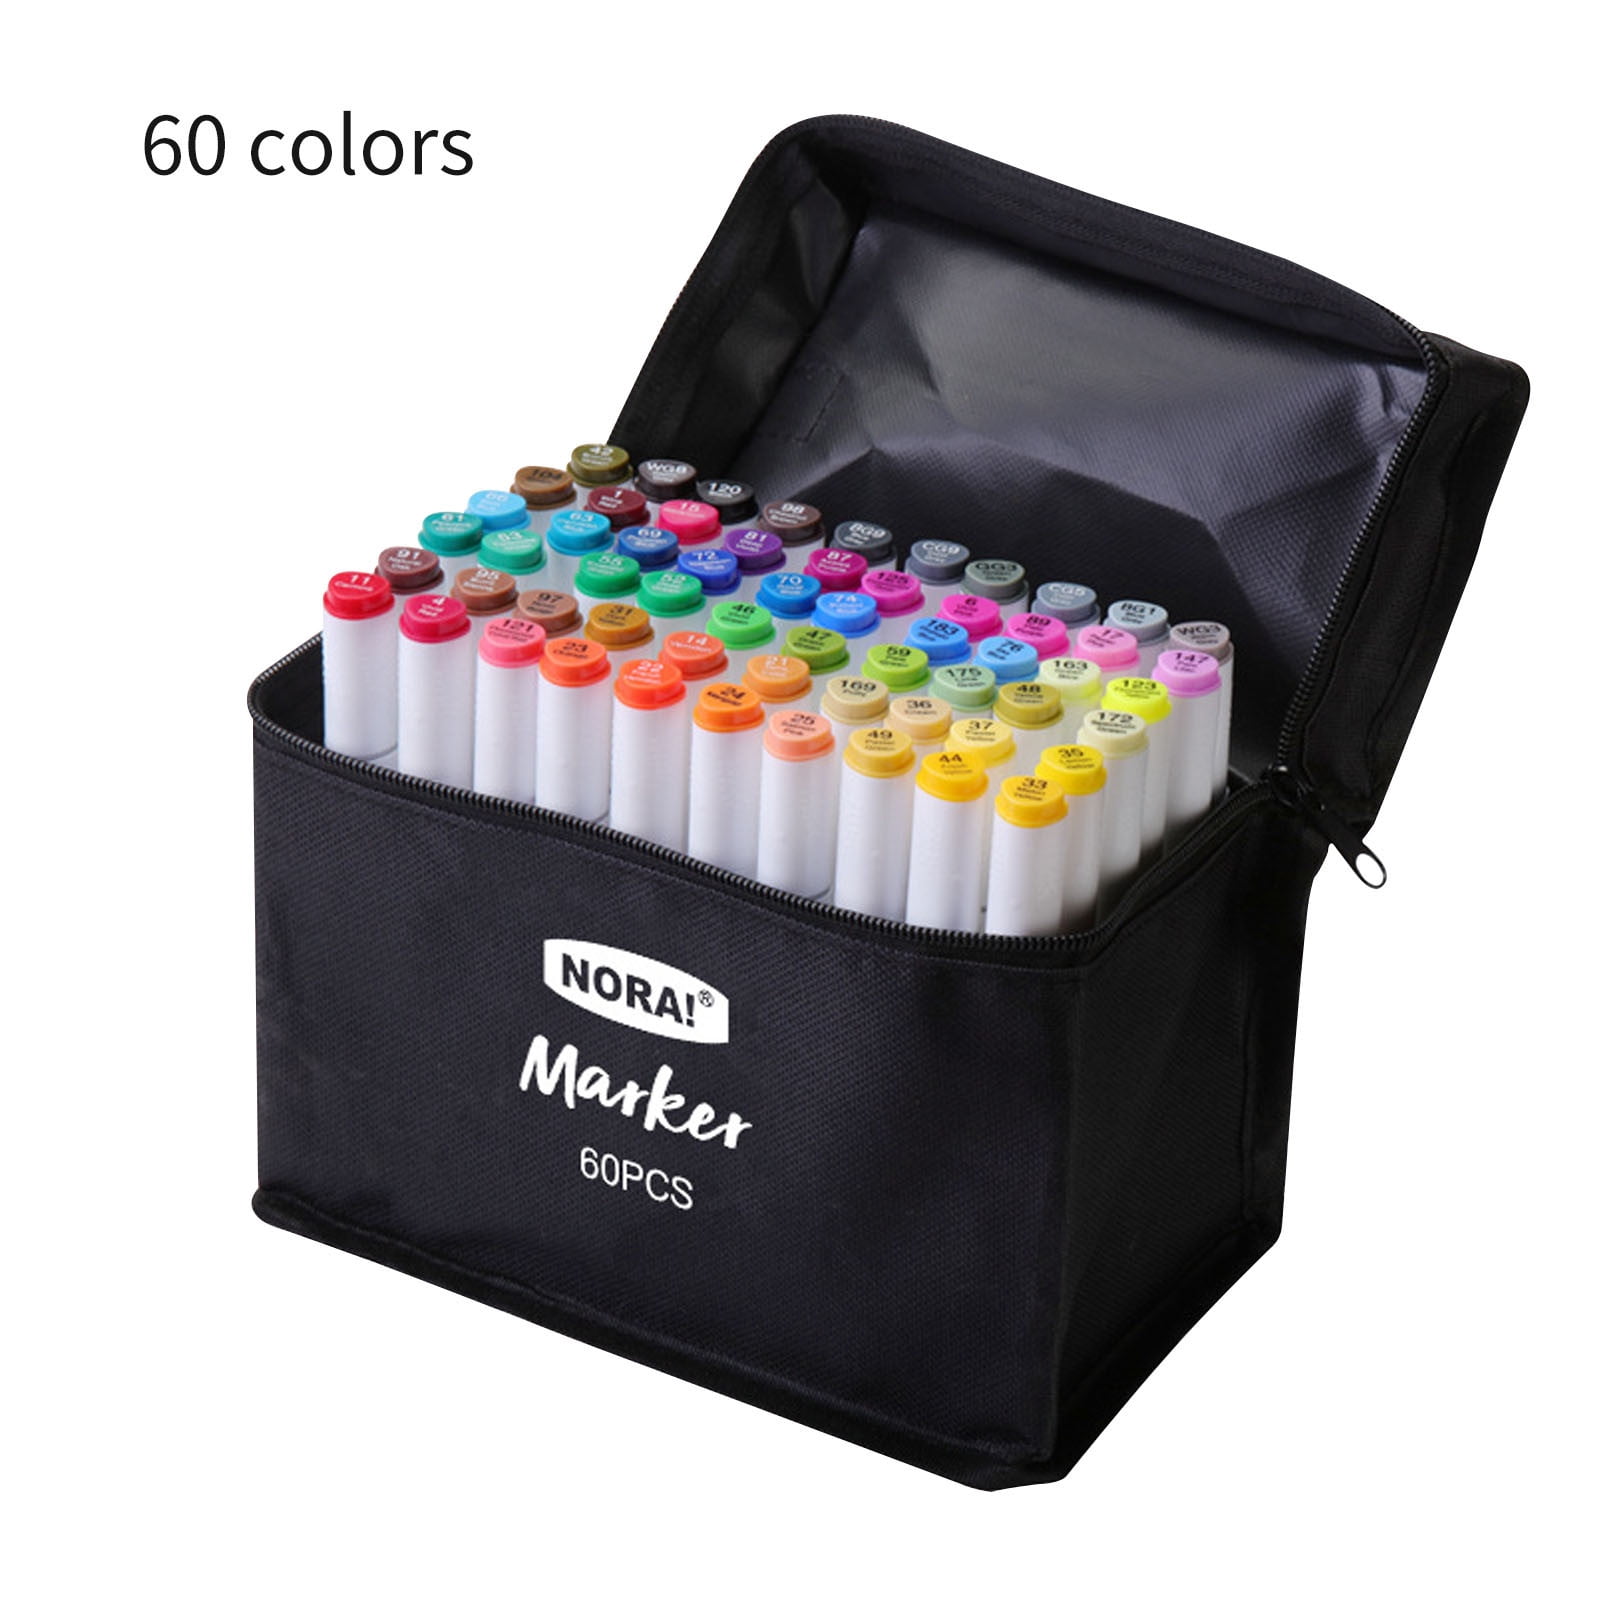 Vikakiooze Highlighters Assorted Colors, Children Drawing Watercolor Pen  Set 8 Colors Marker Washable Painting Pen 5ml 